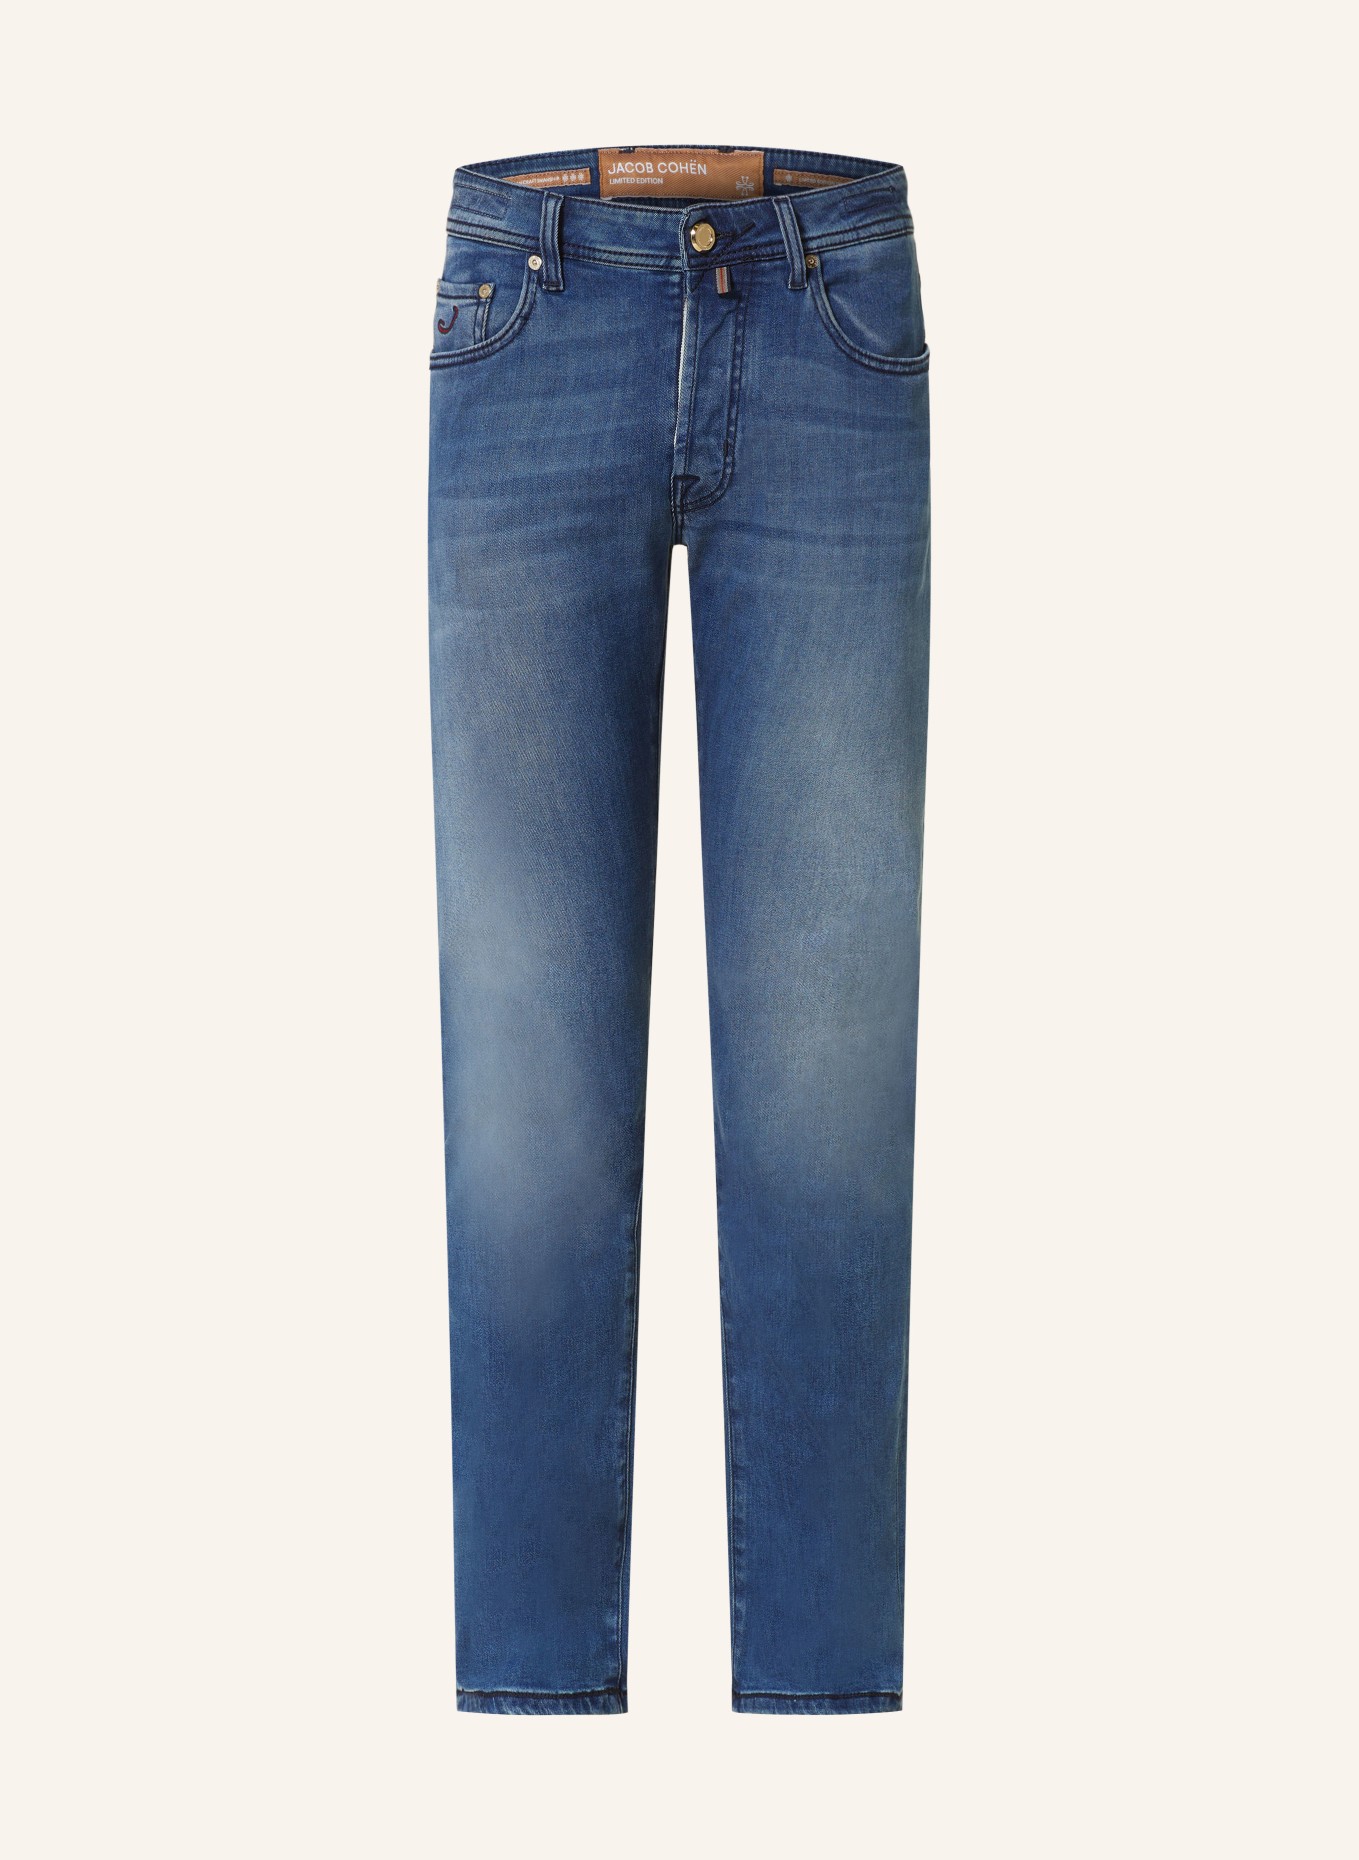 JACOB COHEN Jeans BARD Slim Fit, Farbe: 757D Mid Blue (Bild 1)